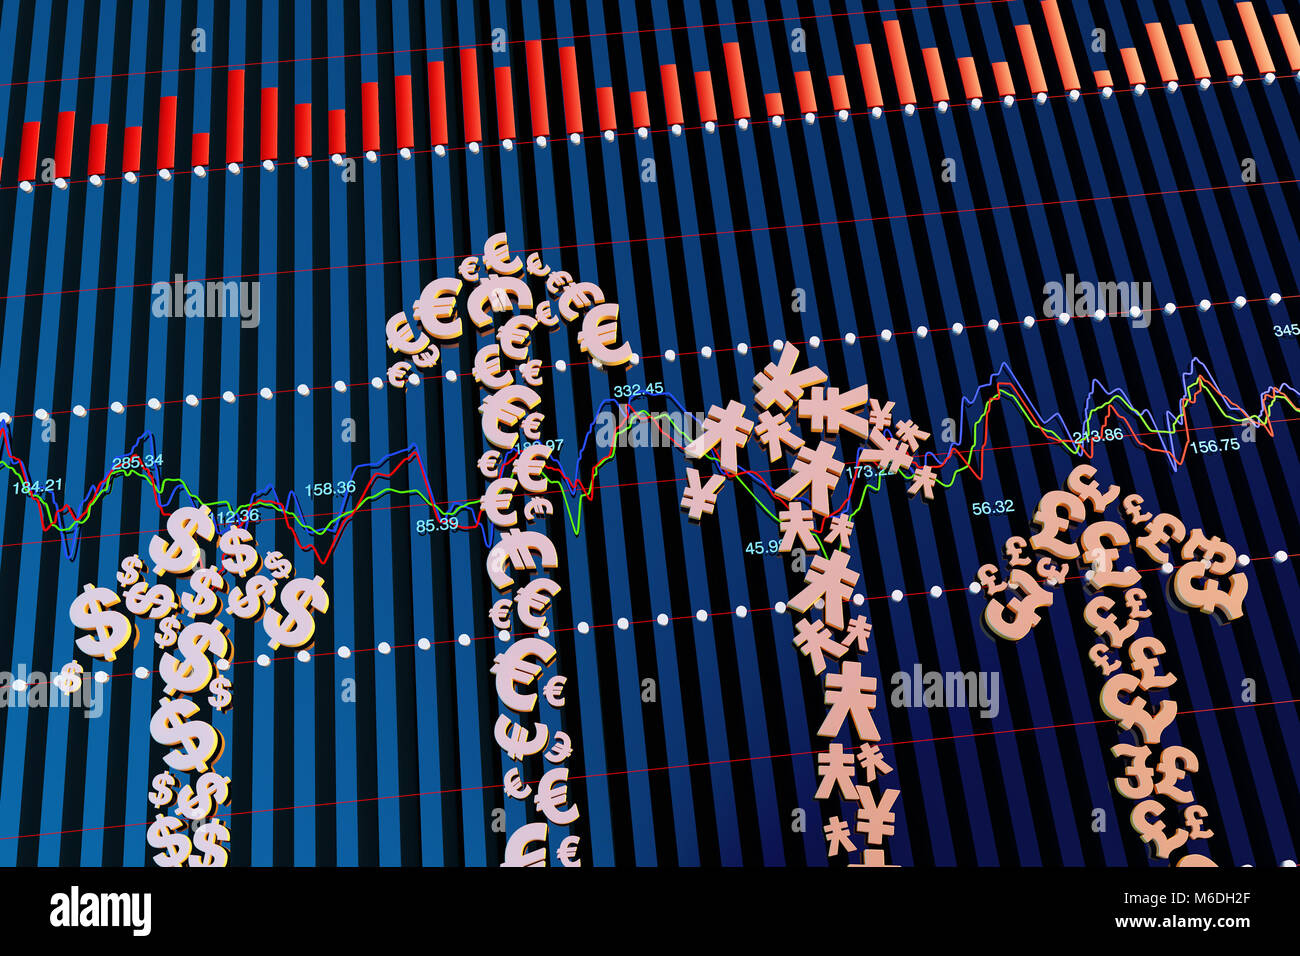 Financial stock market data, success arrow, currency symbol Stock Photo